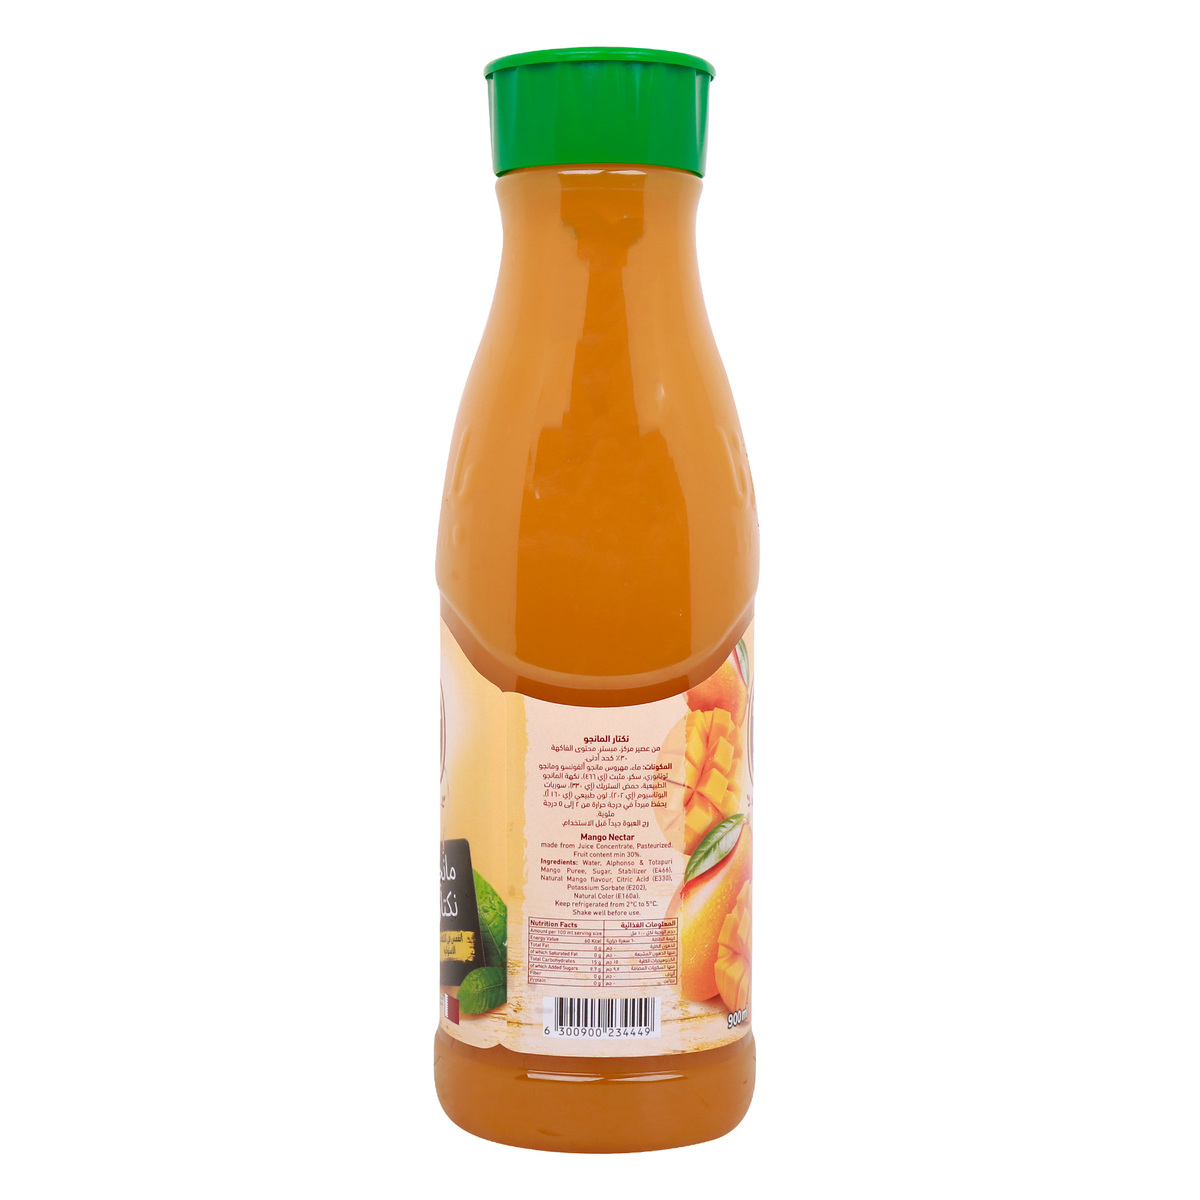 Baladna Alphonso Mango Juice 900ml